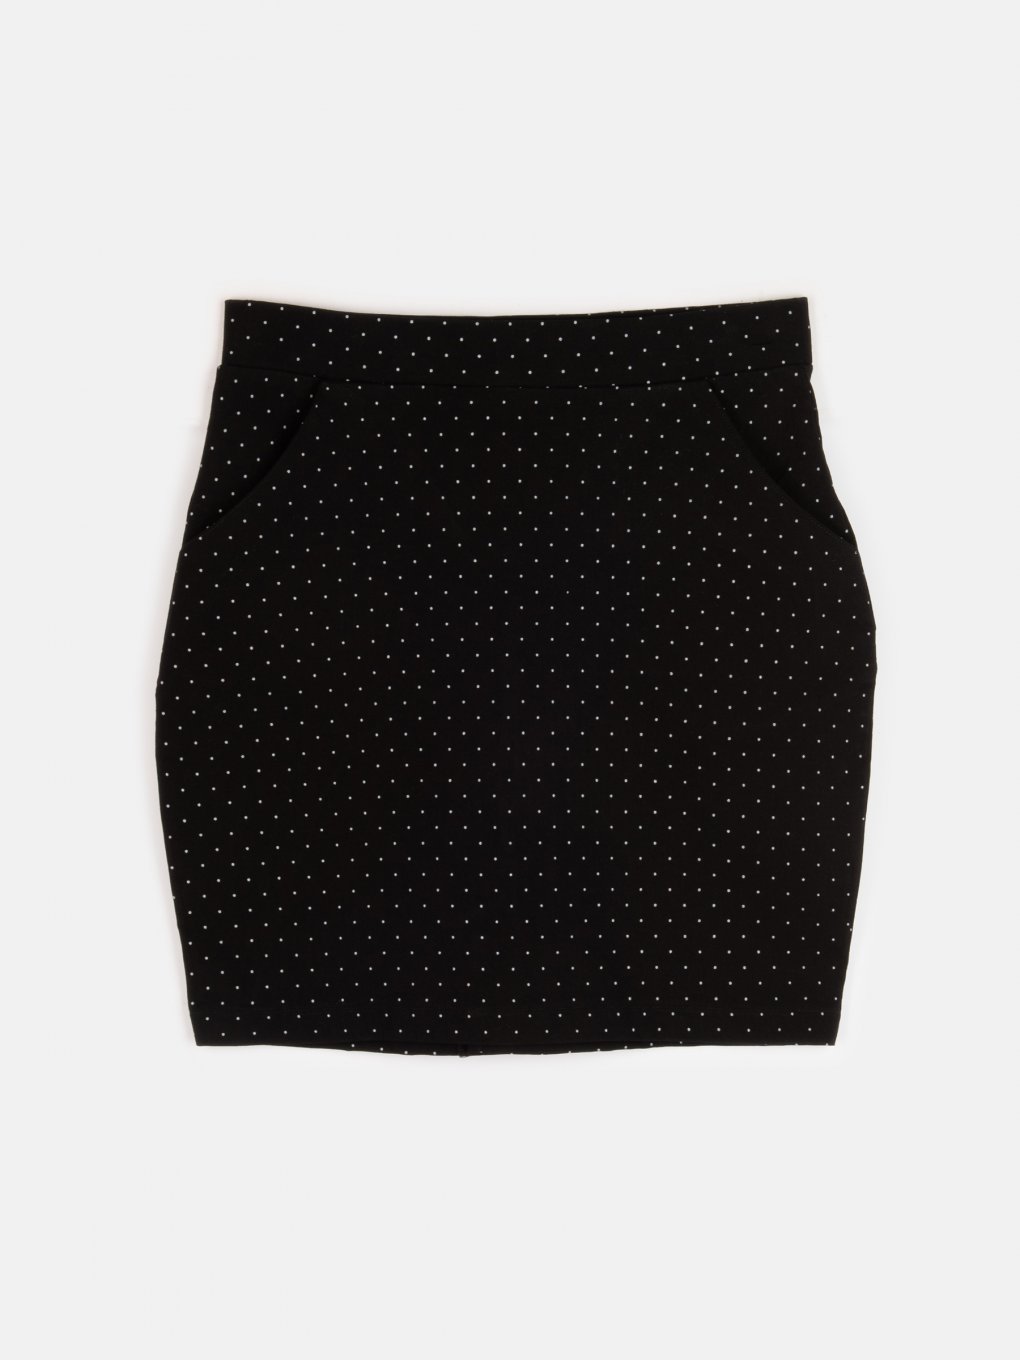 Polka dot print bodycon skirt with pockets